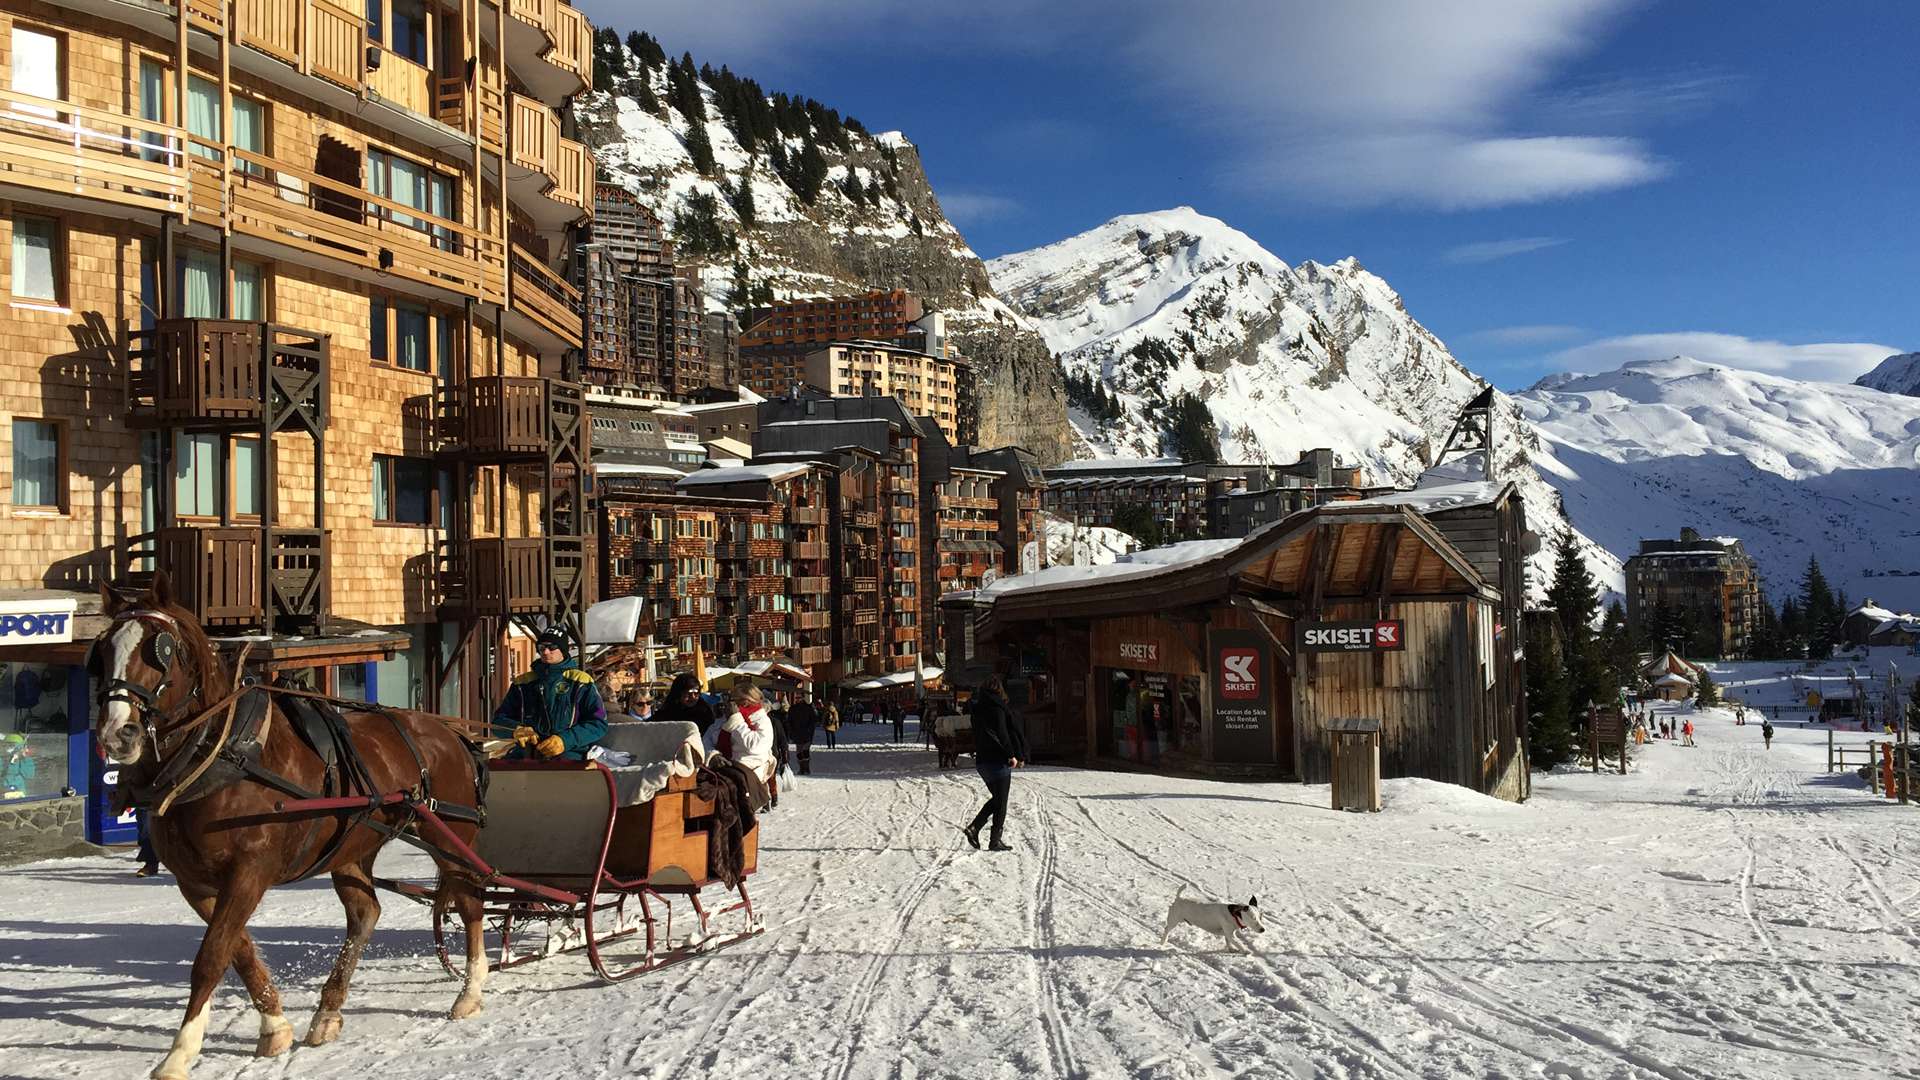 News lifts and piste for Portes du Soleil for the 2019-20 ski season. Avoriaz photo.